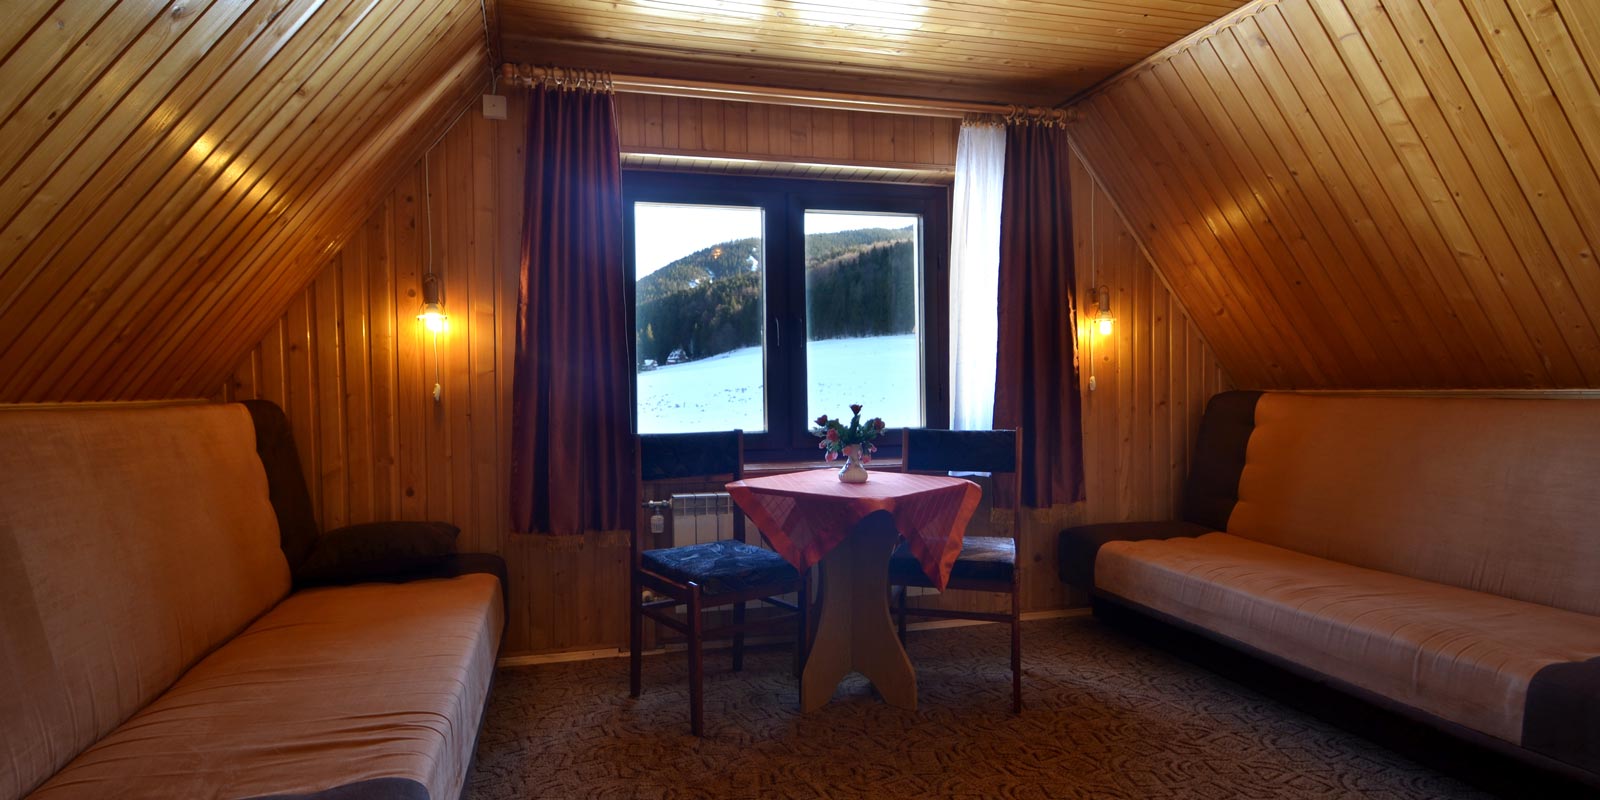 U LISA villa in Zakopane rooms for rent Poland Tatra Mountains 03